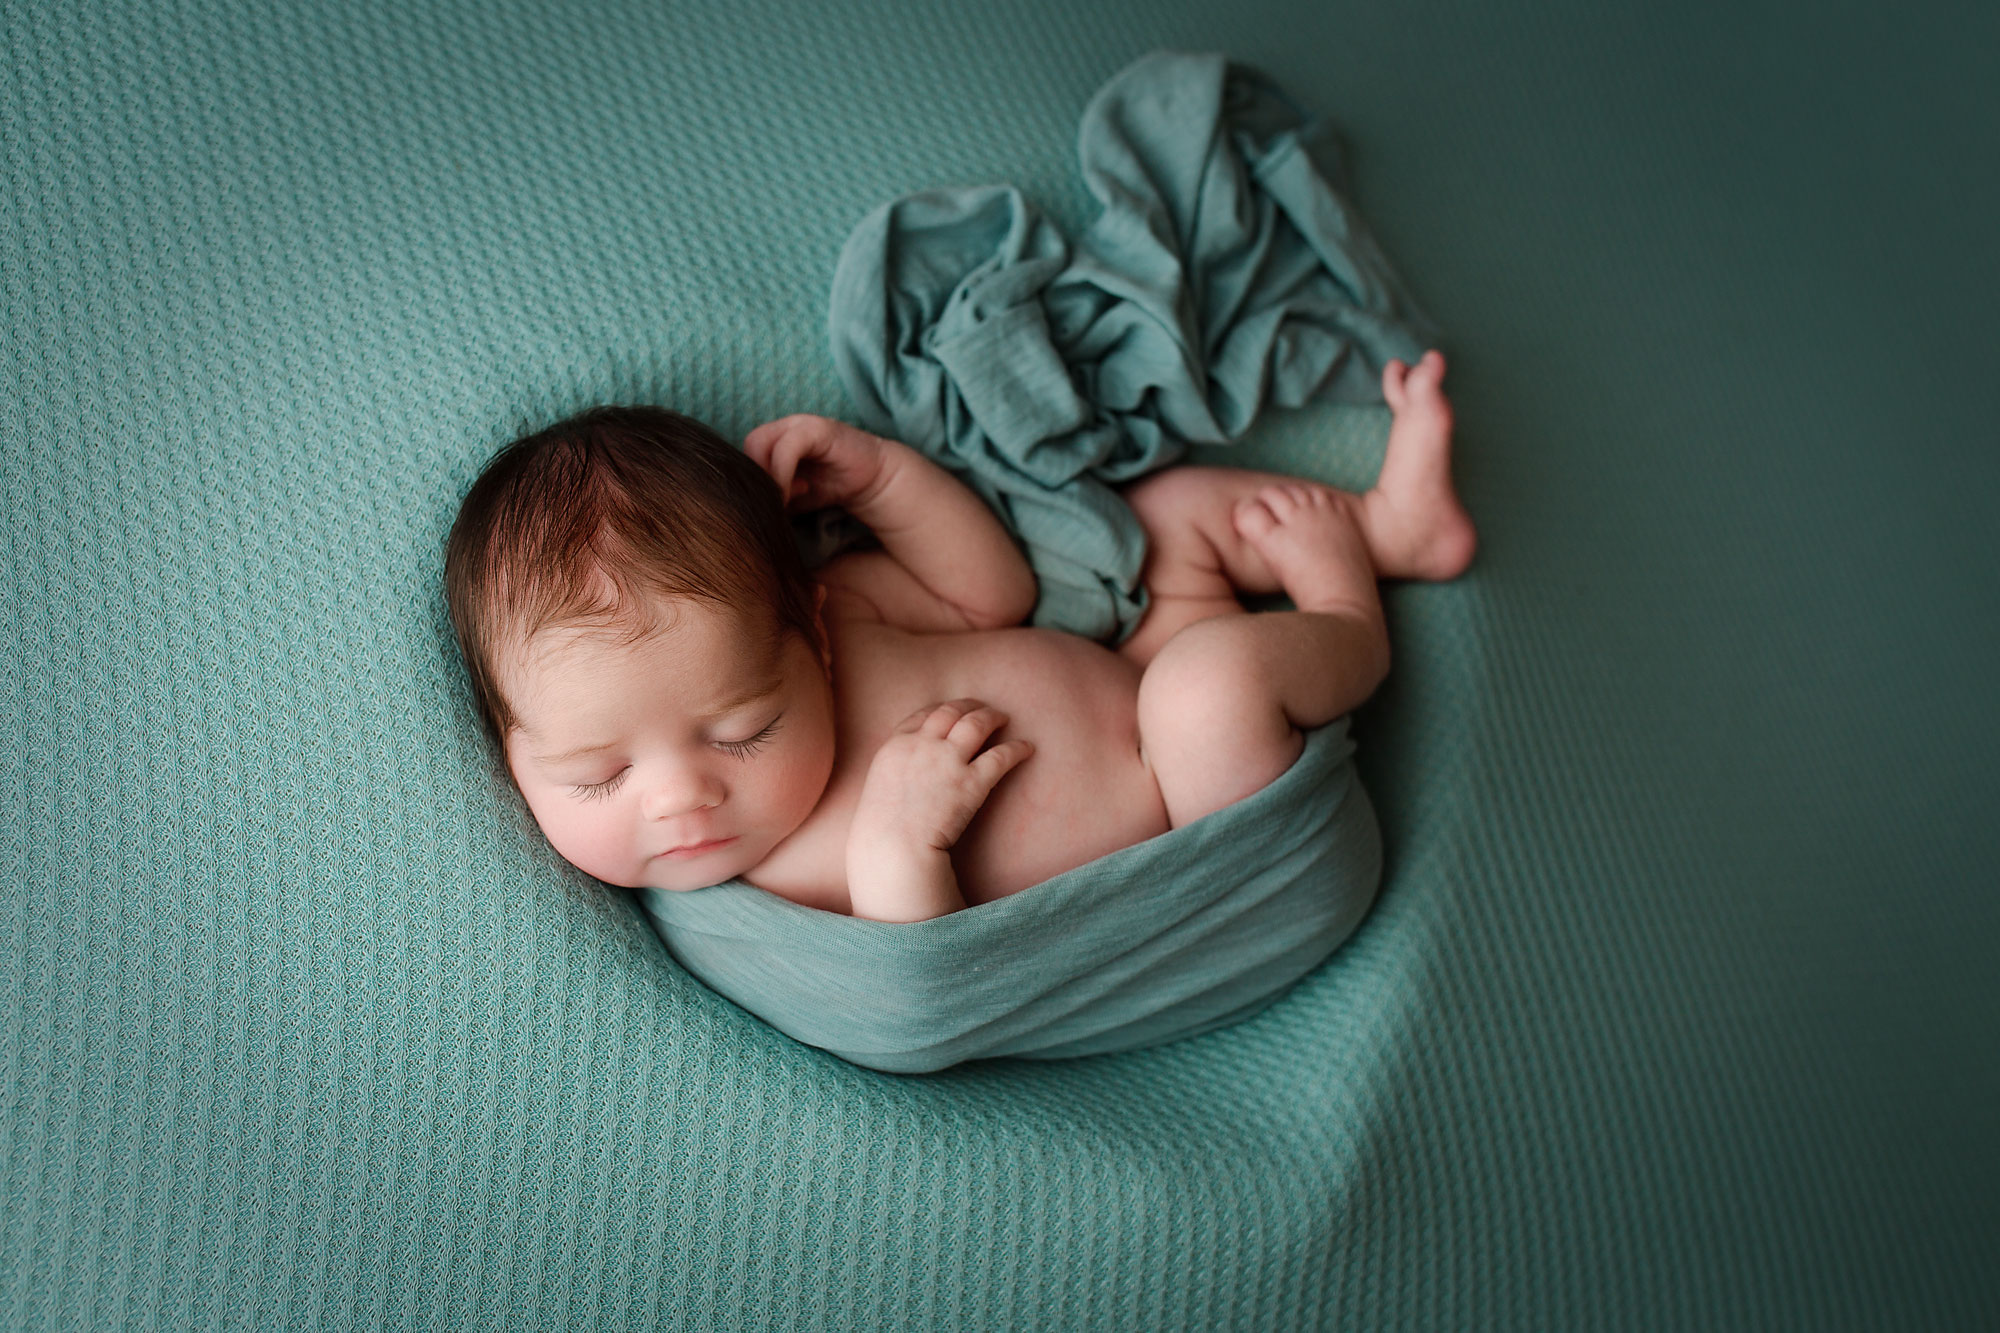 boy newborn photo session ideas 